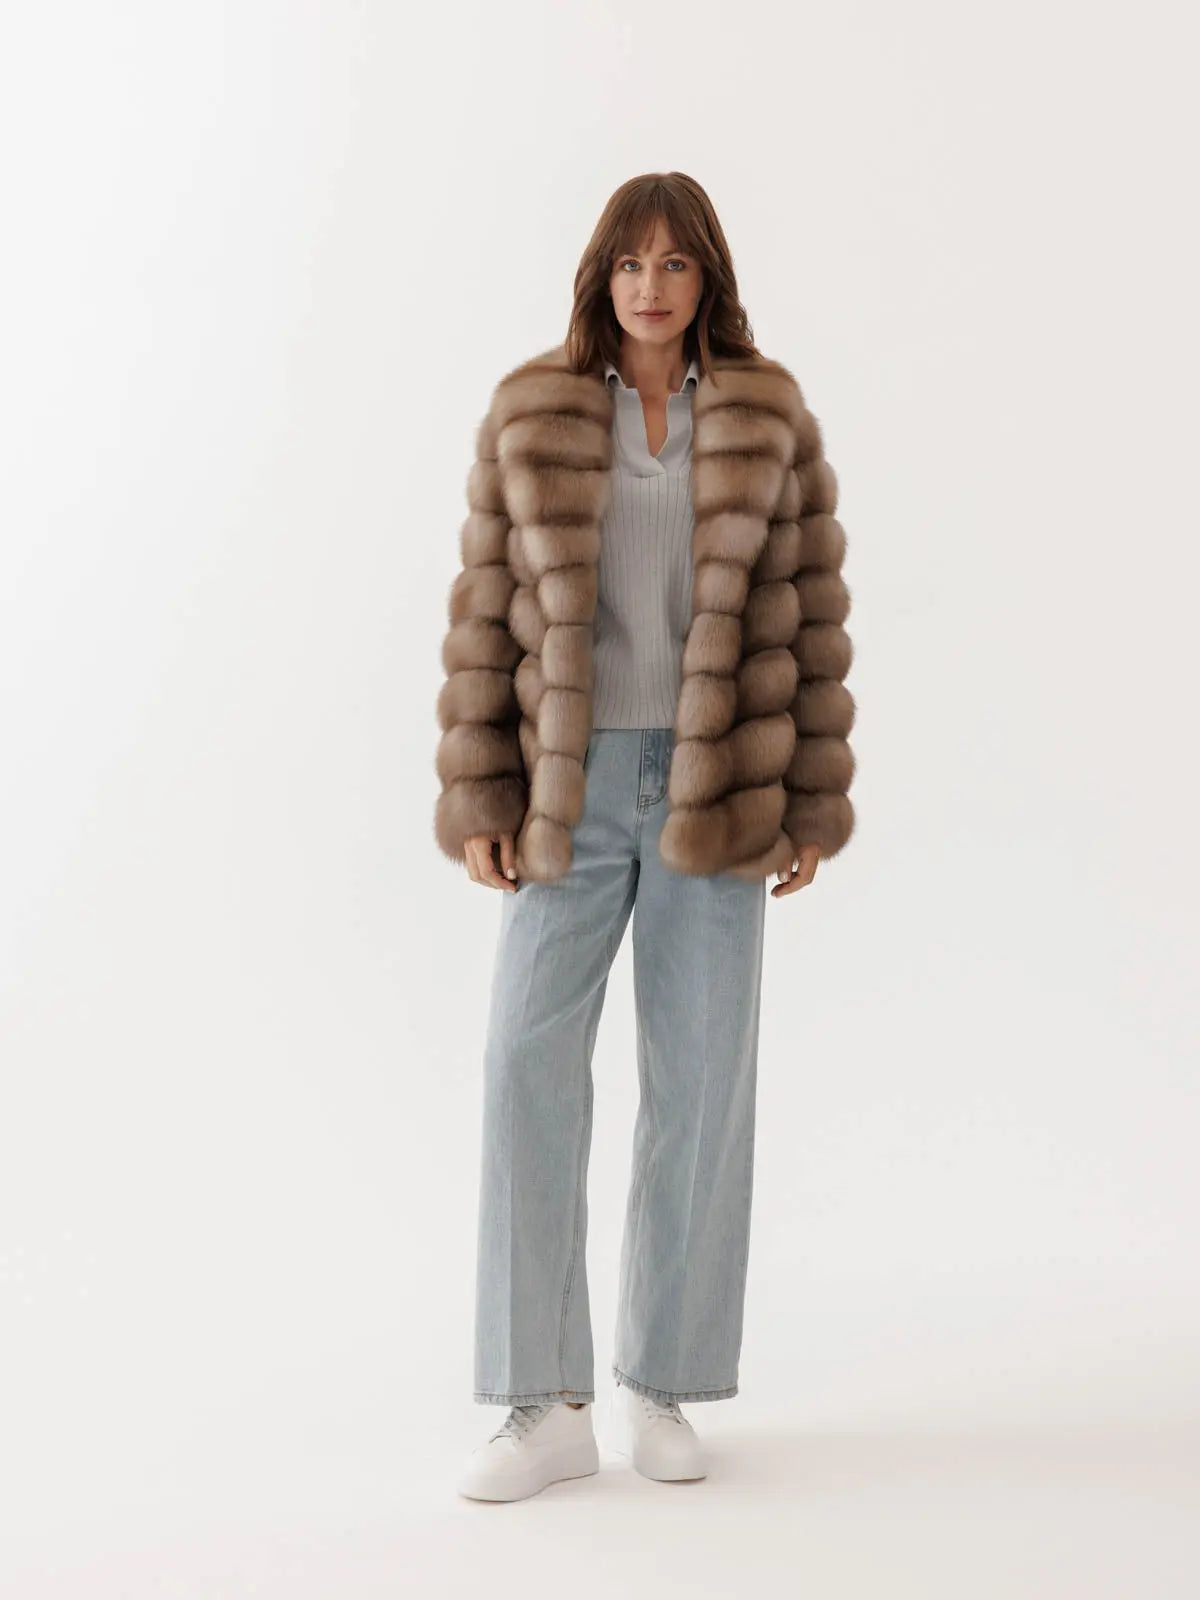 Short marten fur coat with shawl collar for women